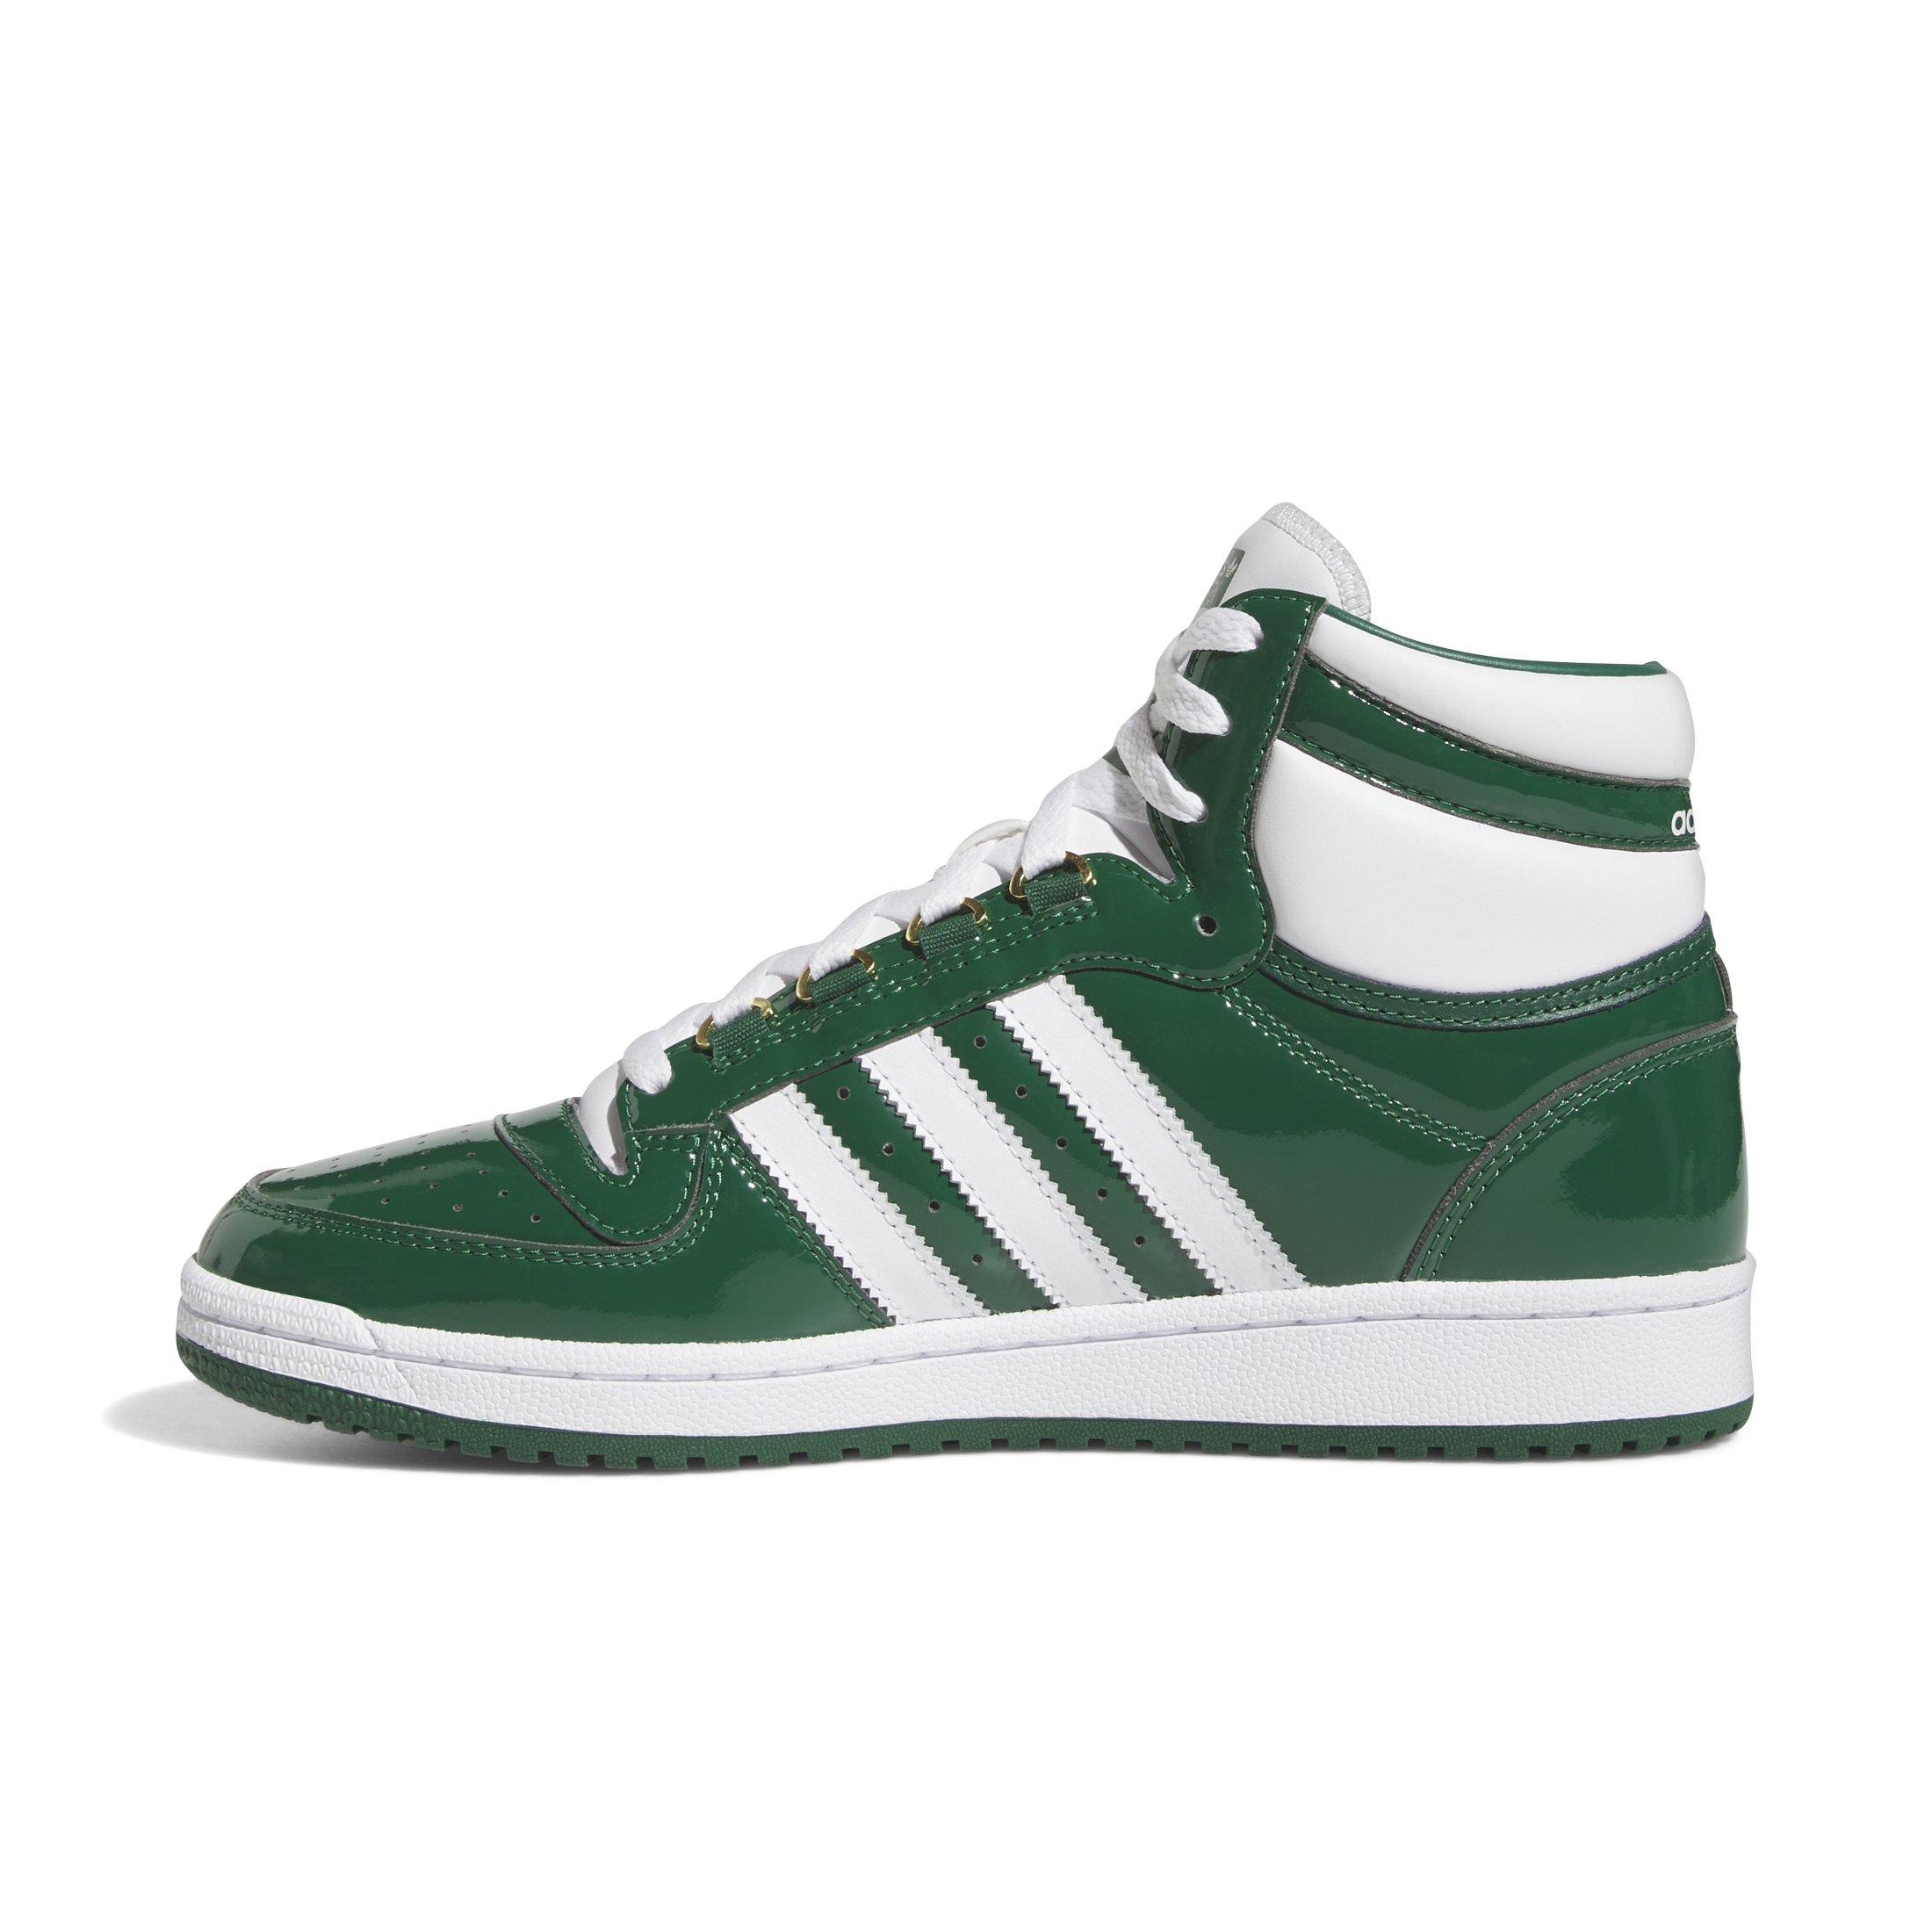 adidas Top Ten "Green/White Men's Shoe